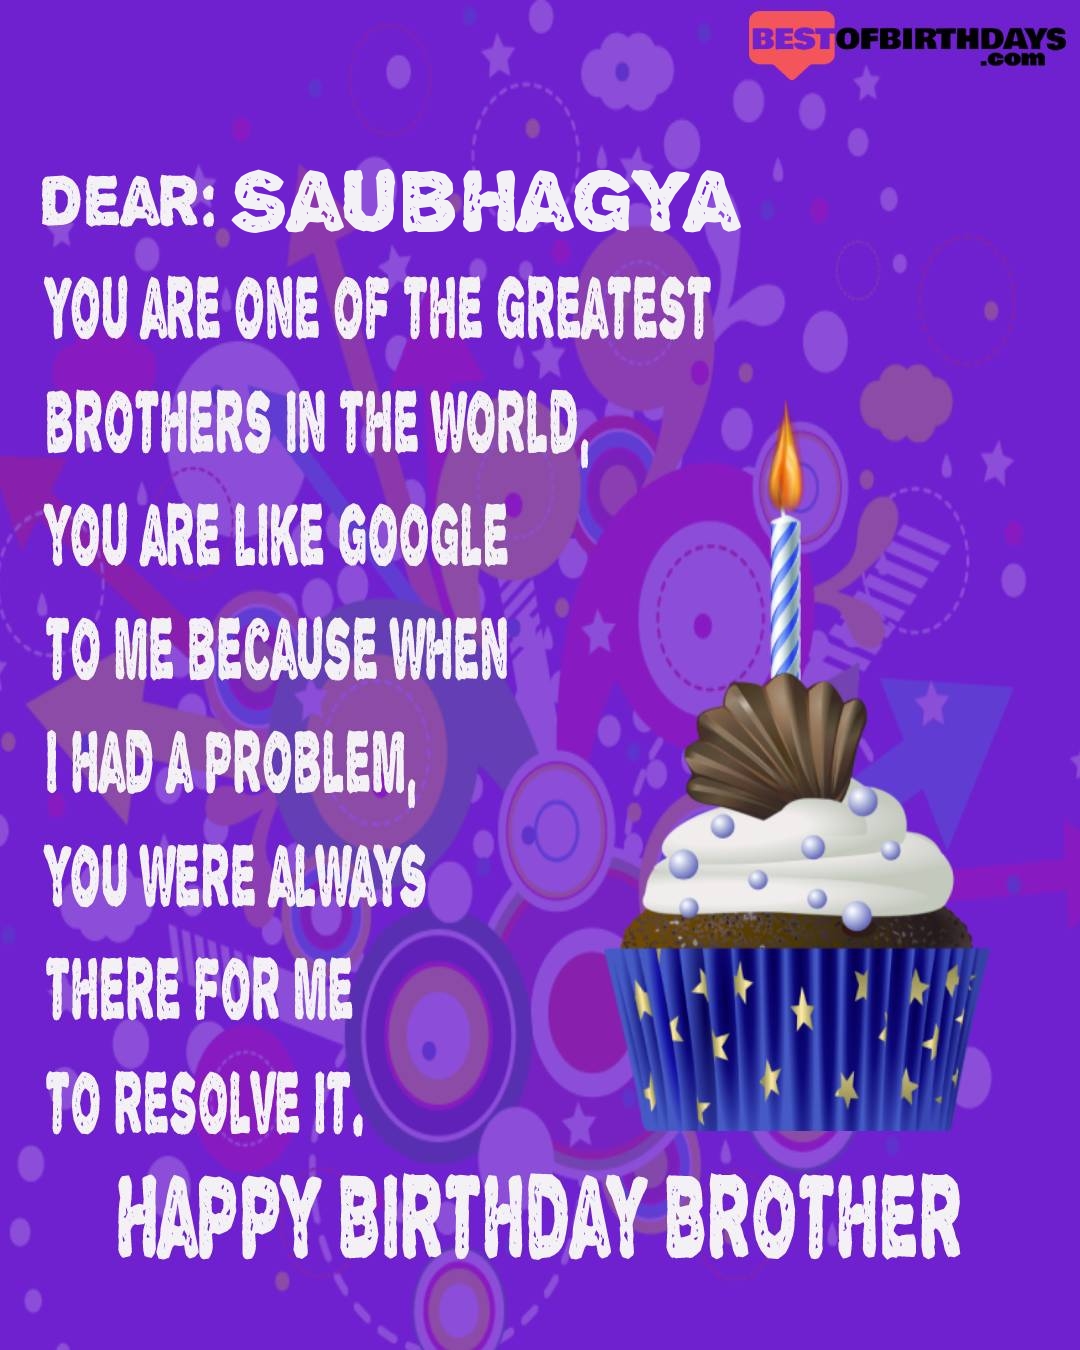 Happy birthday saubhagya bhai brother bro